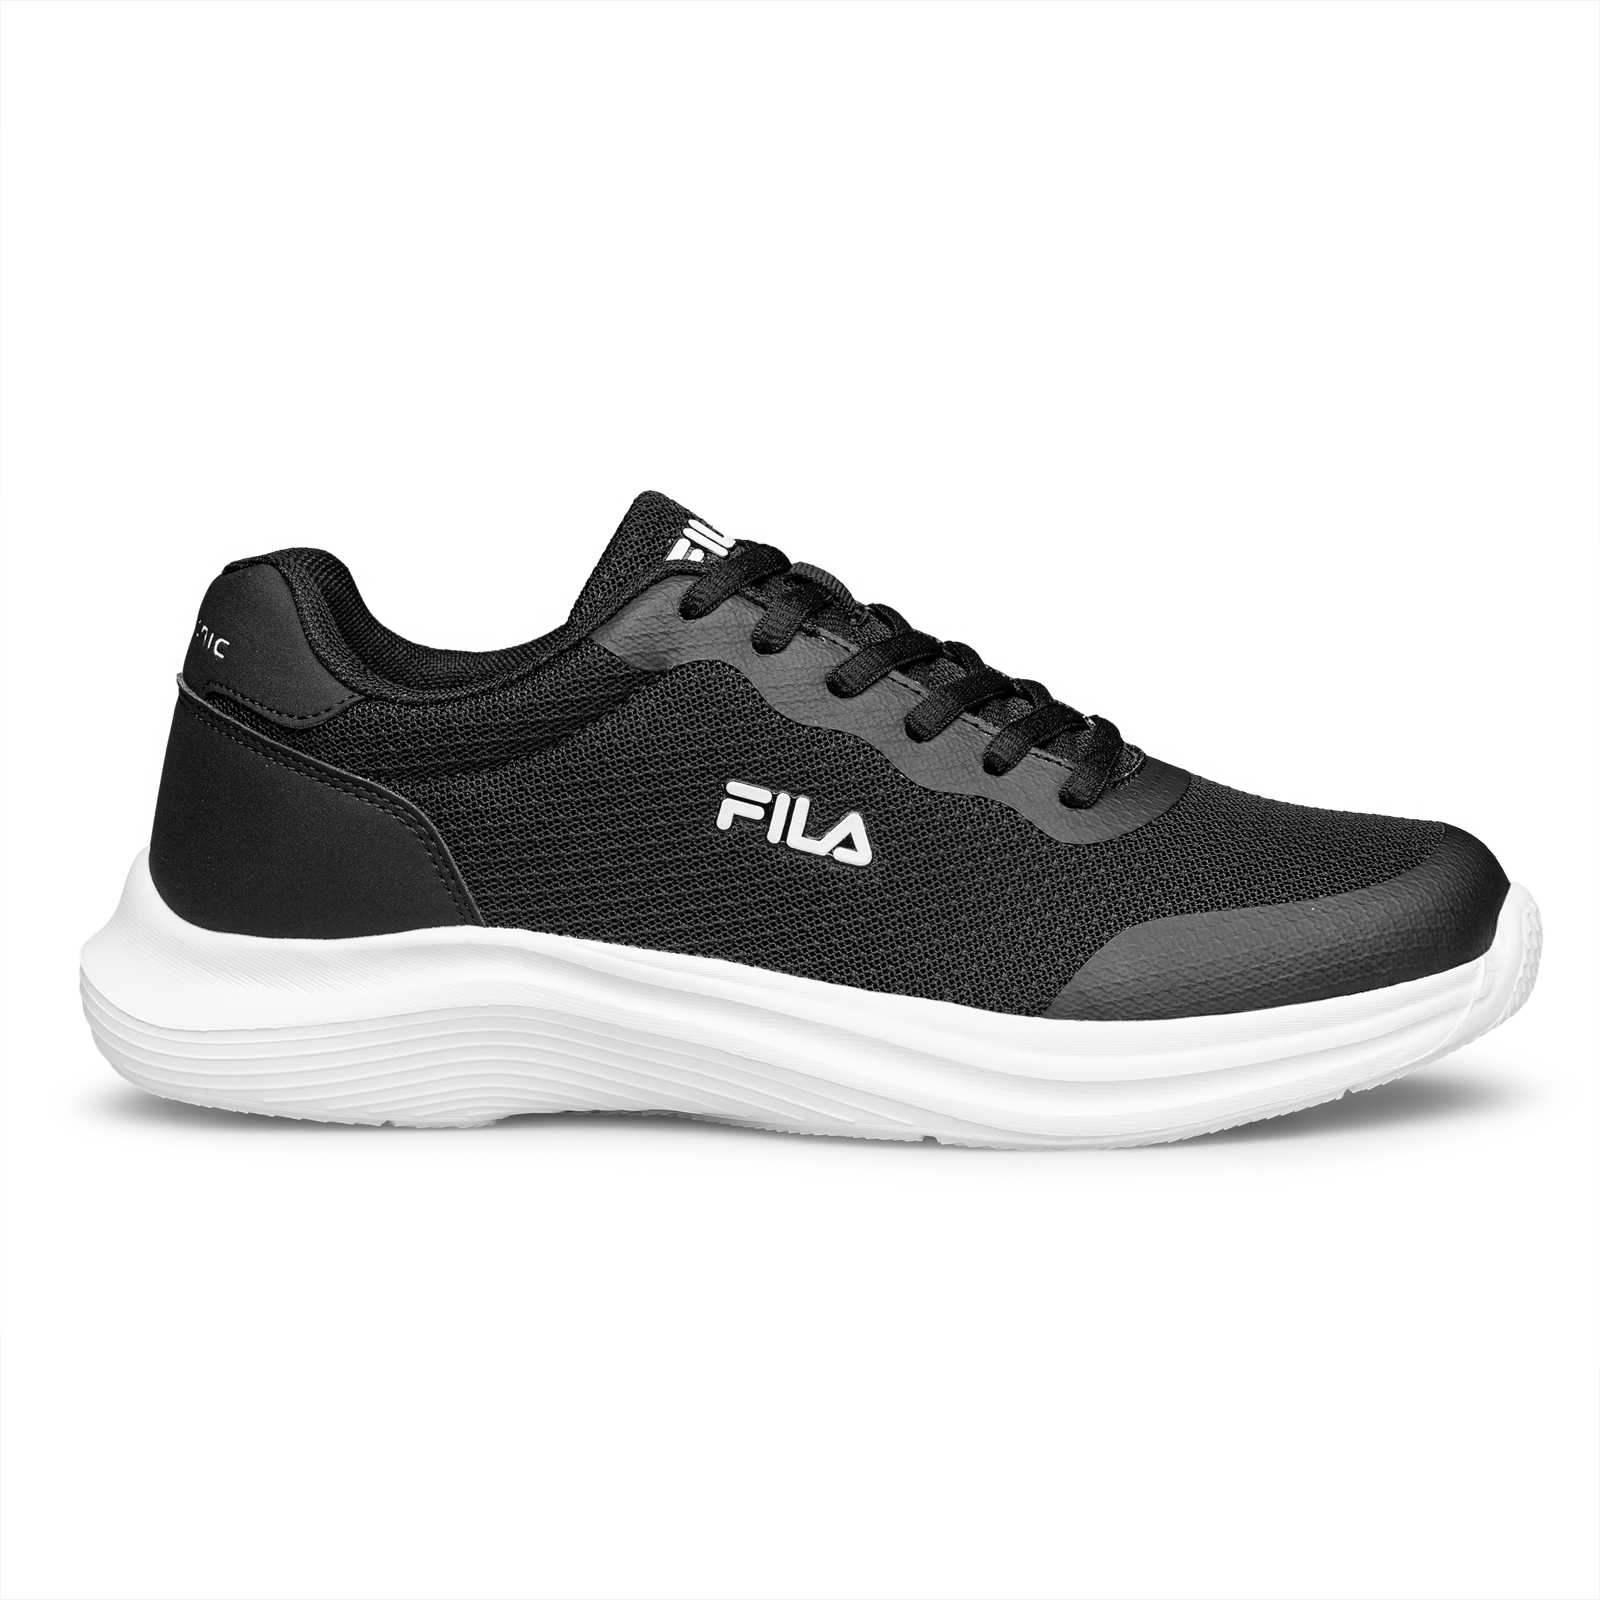 Fila - MEMORY DOLOMITE NANOBIONIC FOOTWEAR - BLACK WHITE Ανδρικά > Παπούτσια > Αθλητικά > Παπούτσι Low Cut